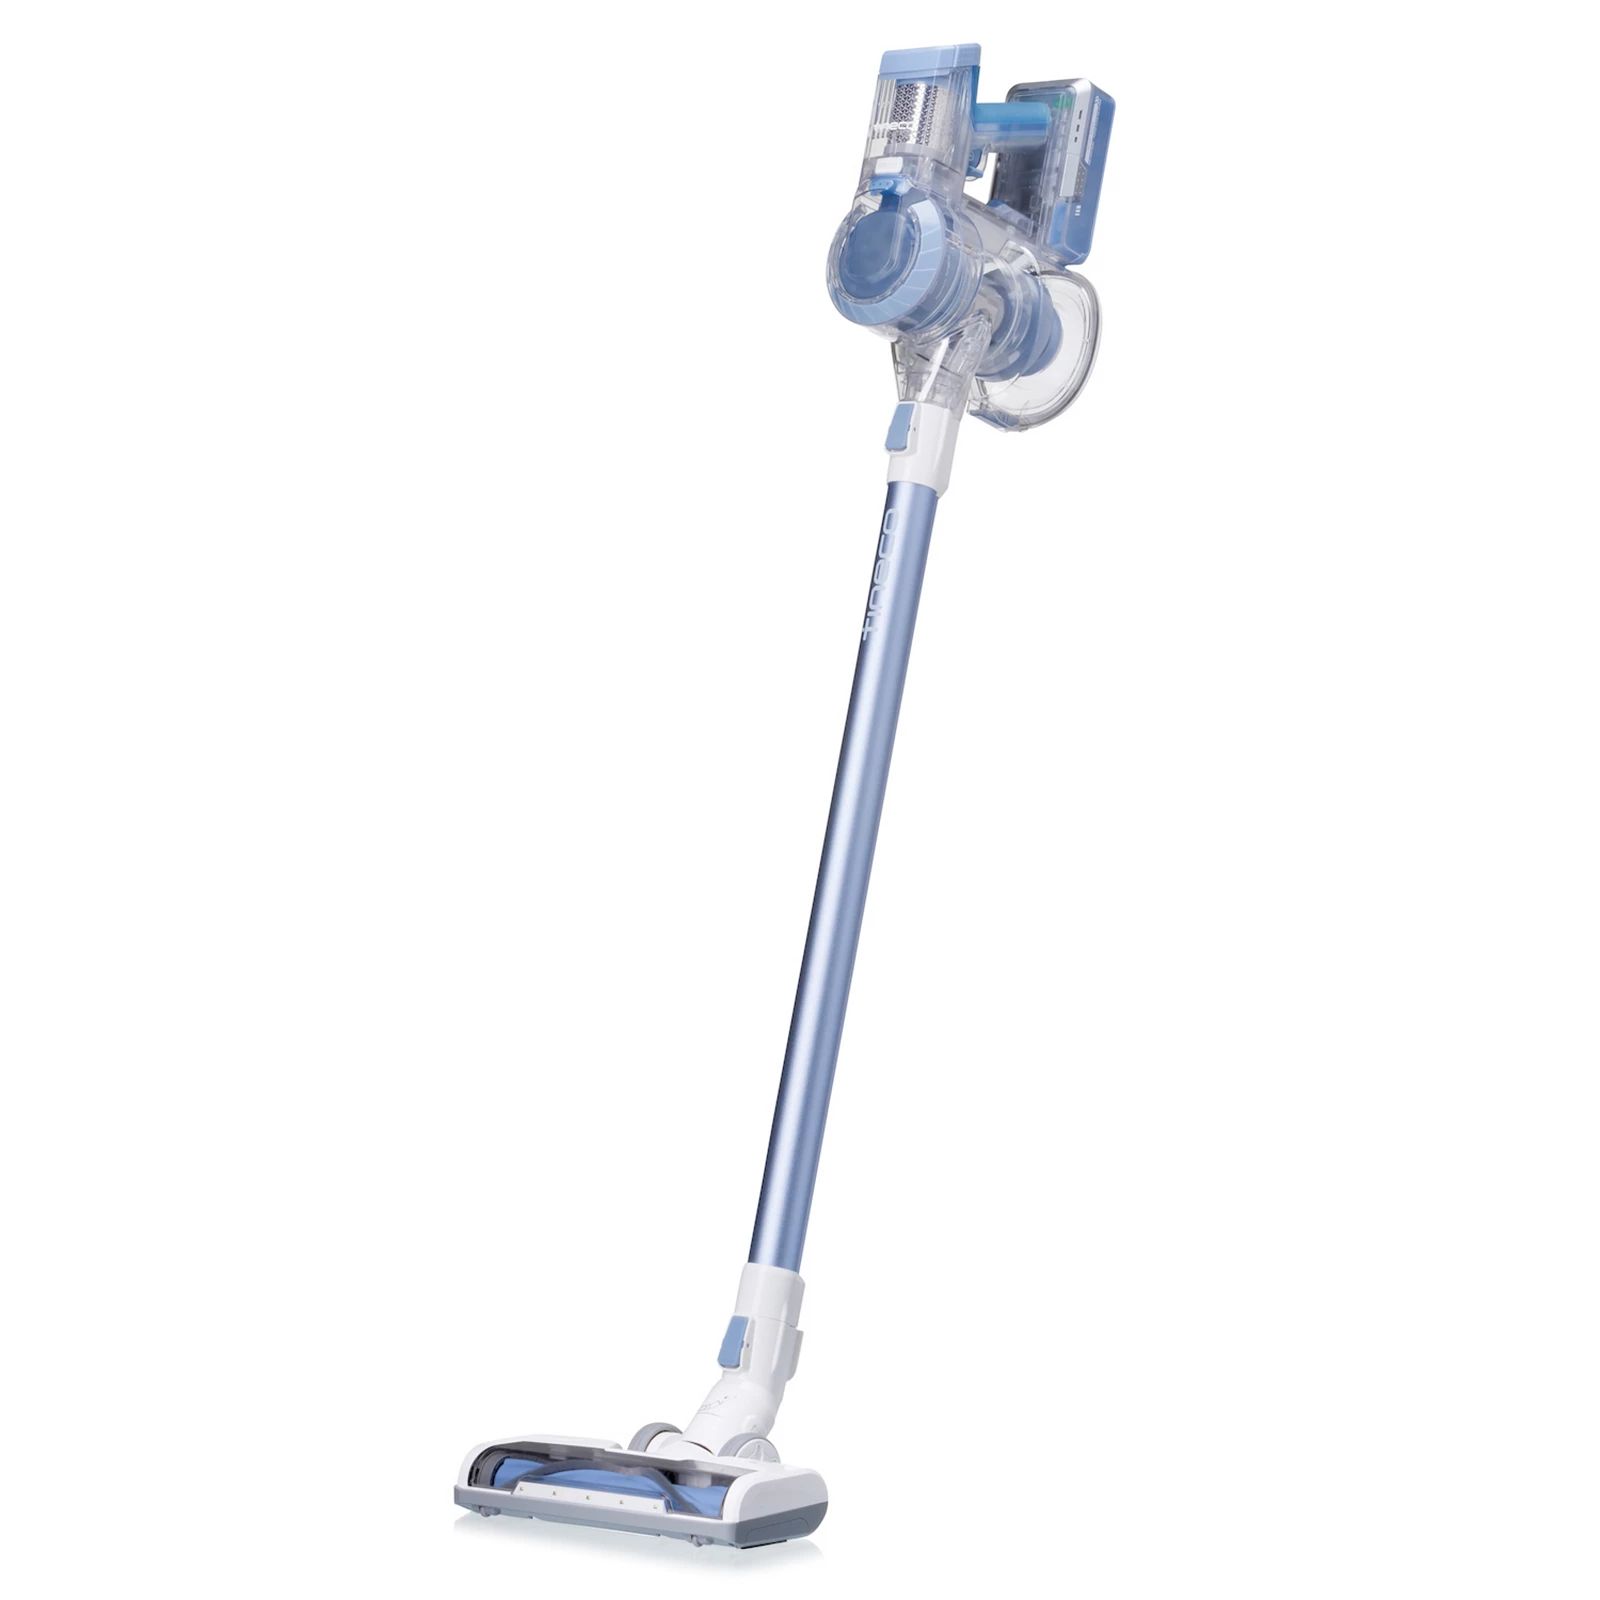 Tineco A11 Flex Cordless Stick Vacuum, Blue | Kohl's